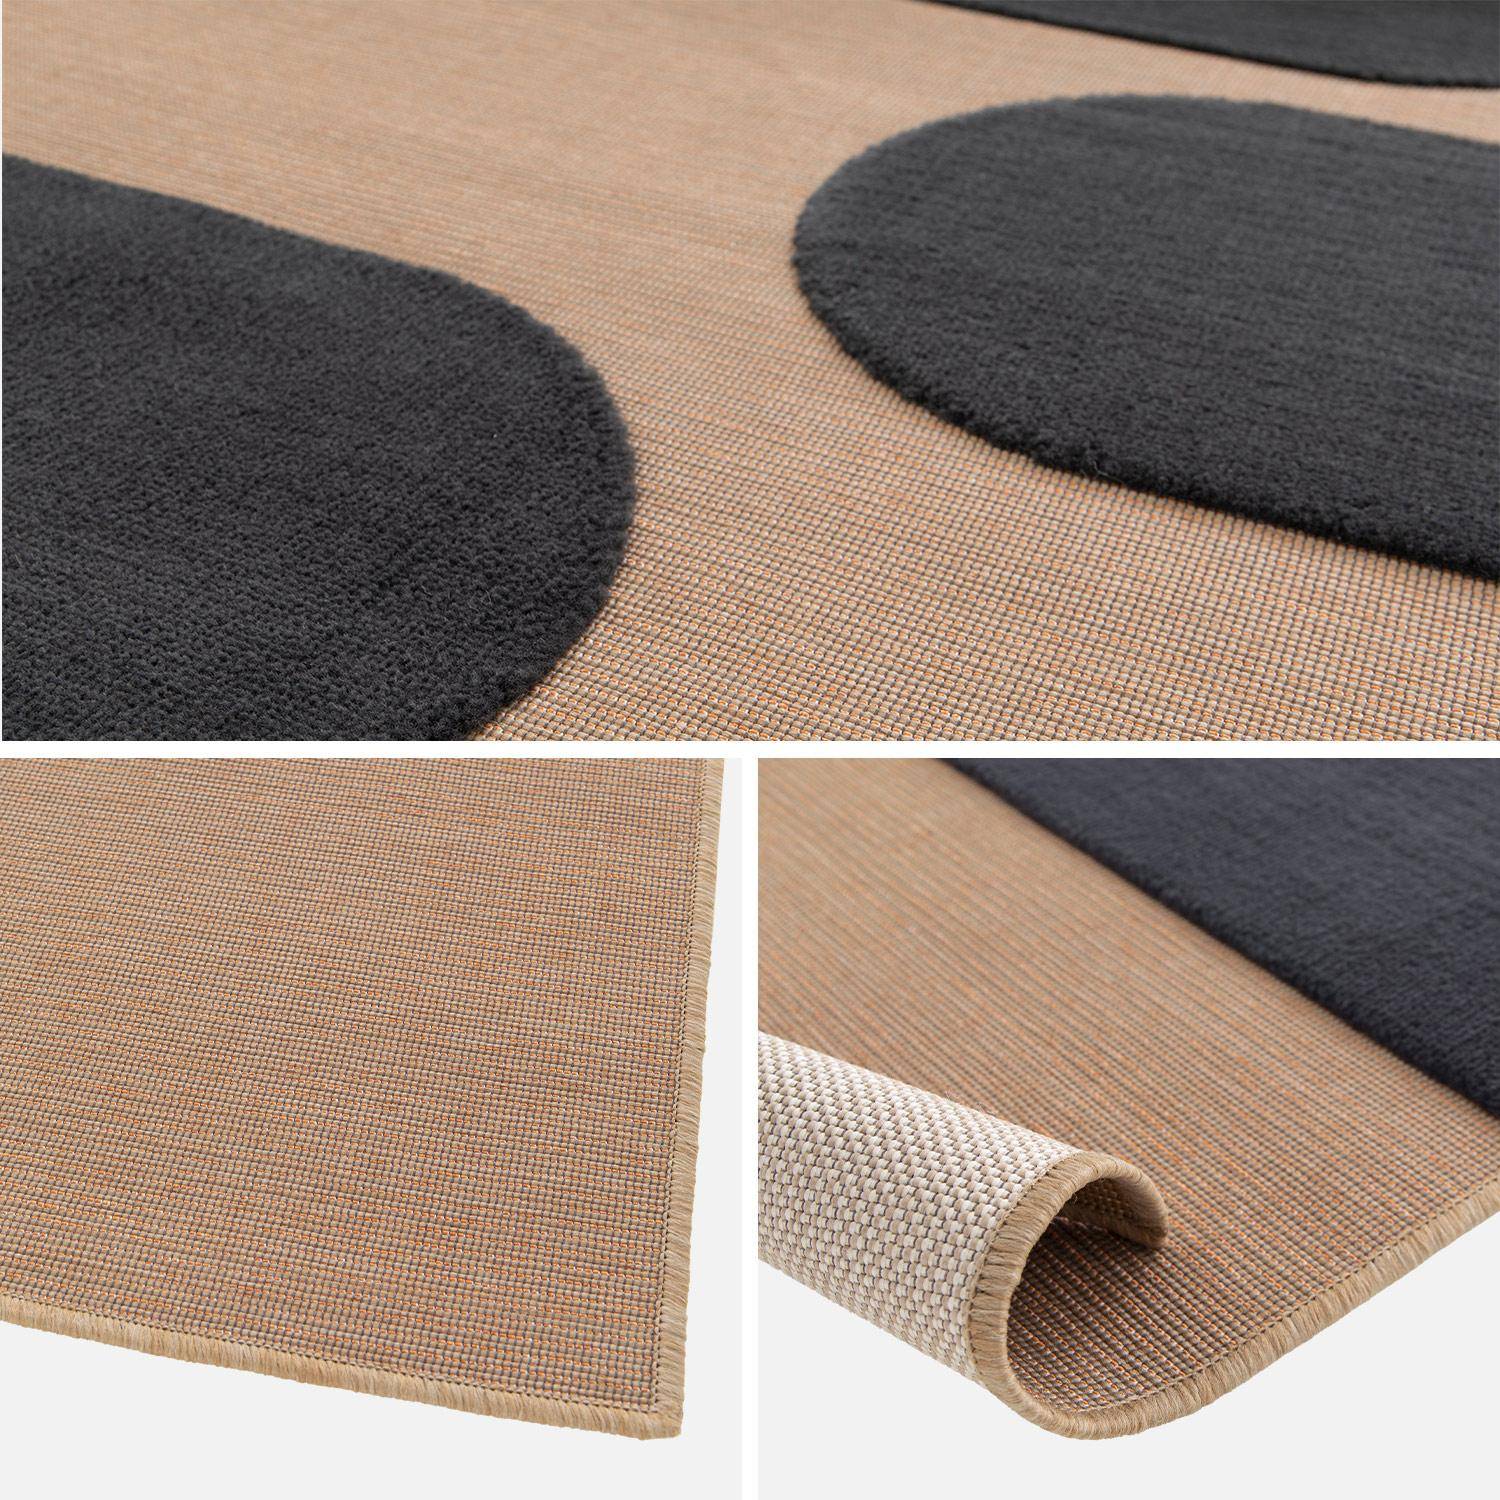 Beige interior/exterior rug with black geometric pattern, Anton, 160 x 230 cm Photo4